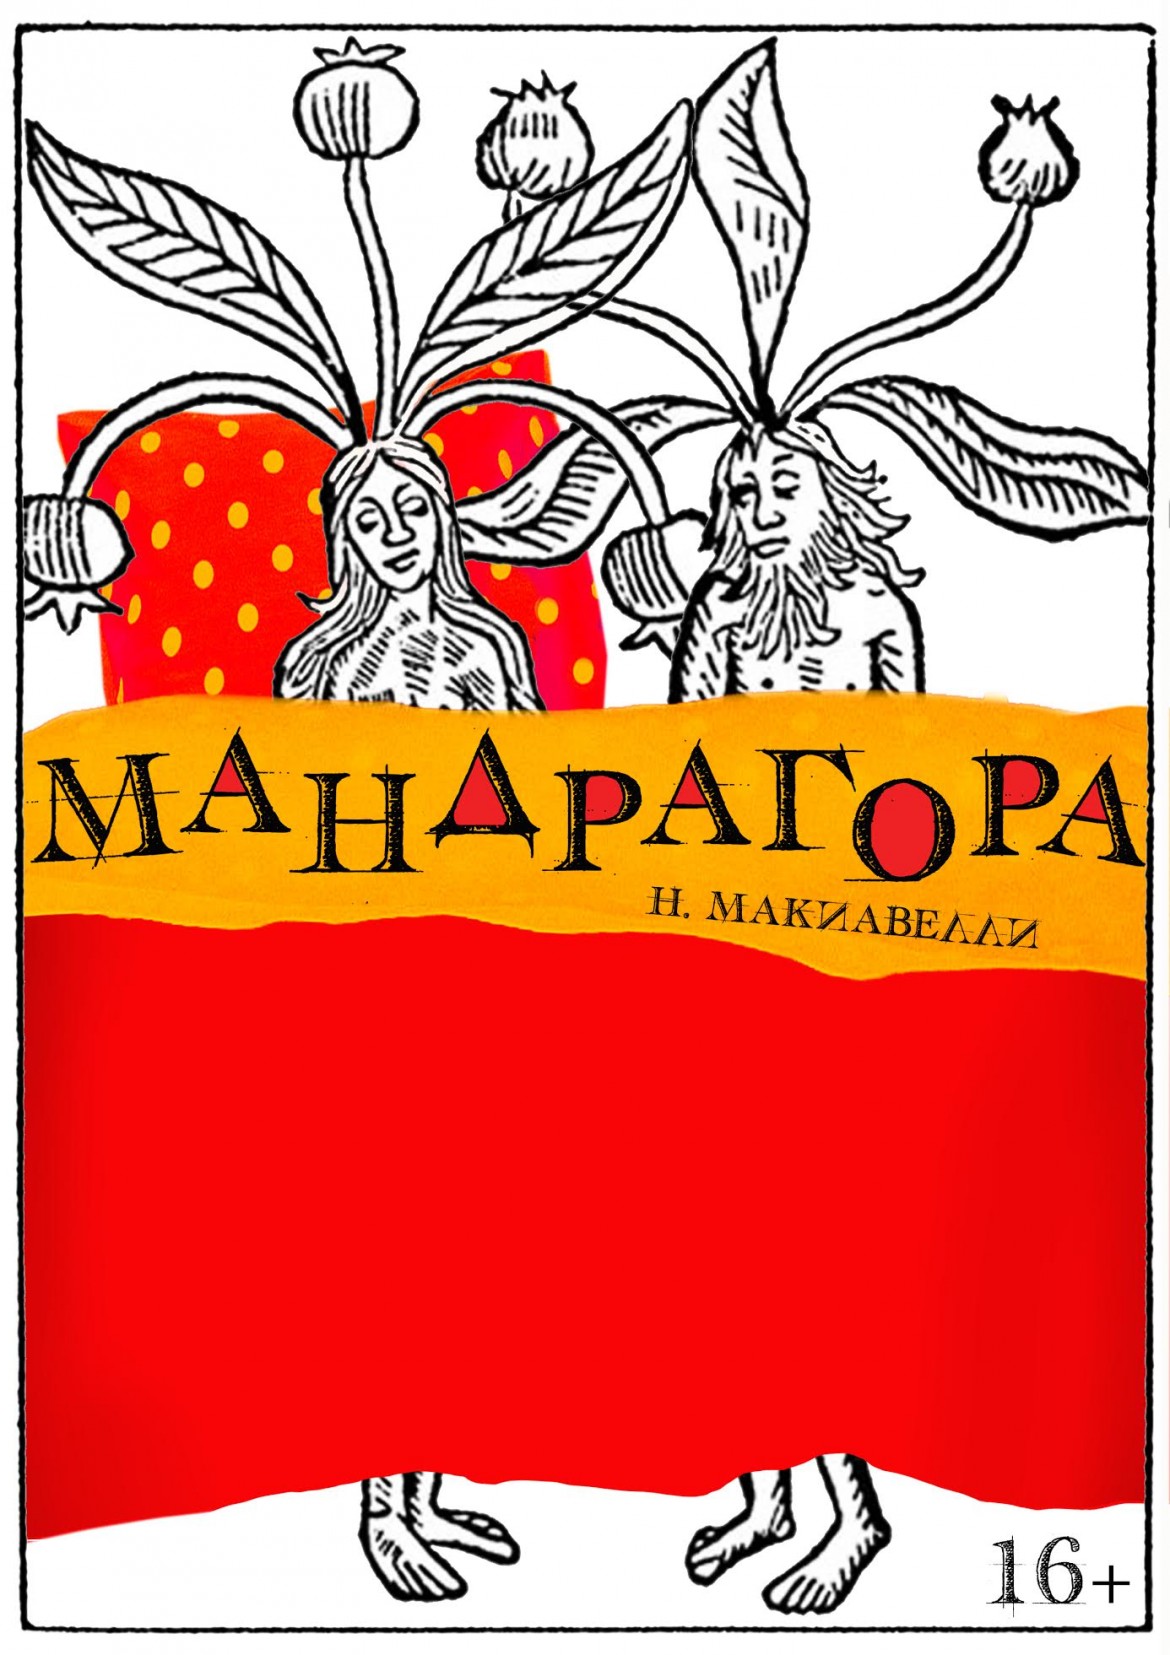 Изложение: Мандрагора (Mandragora)